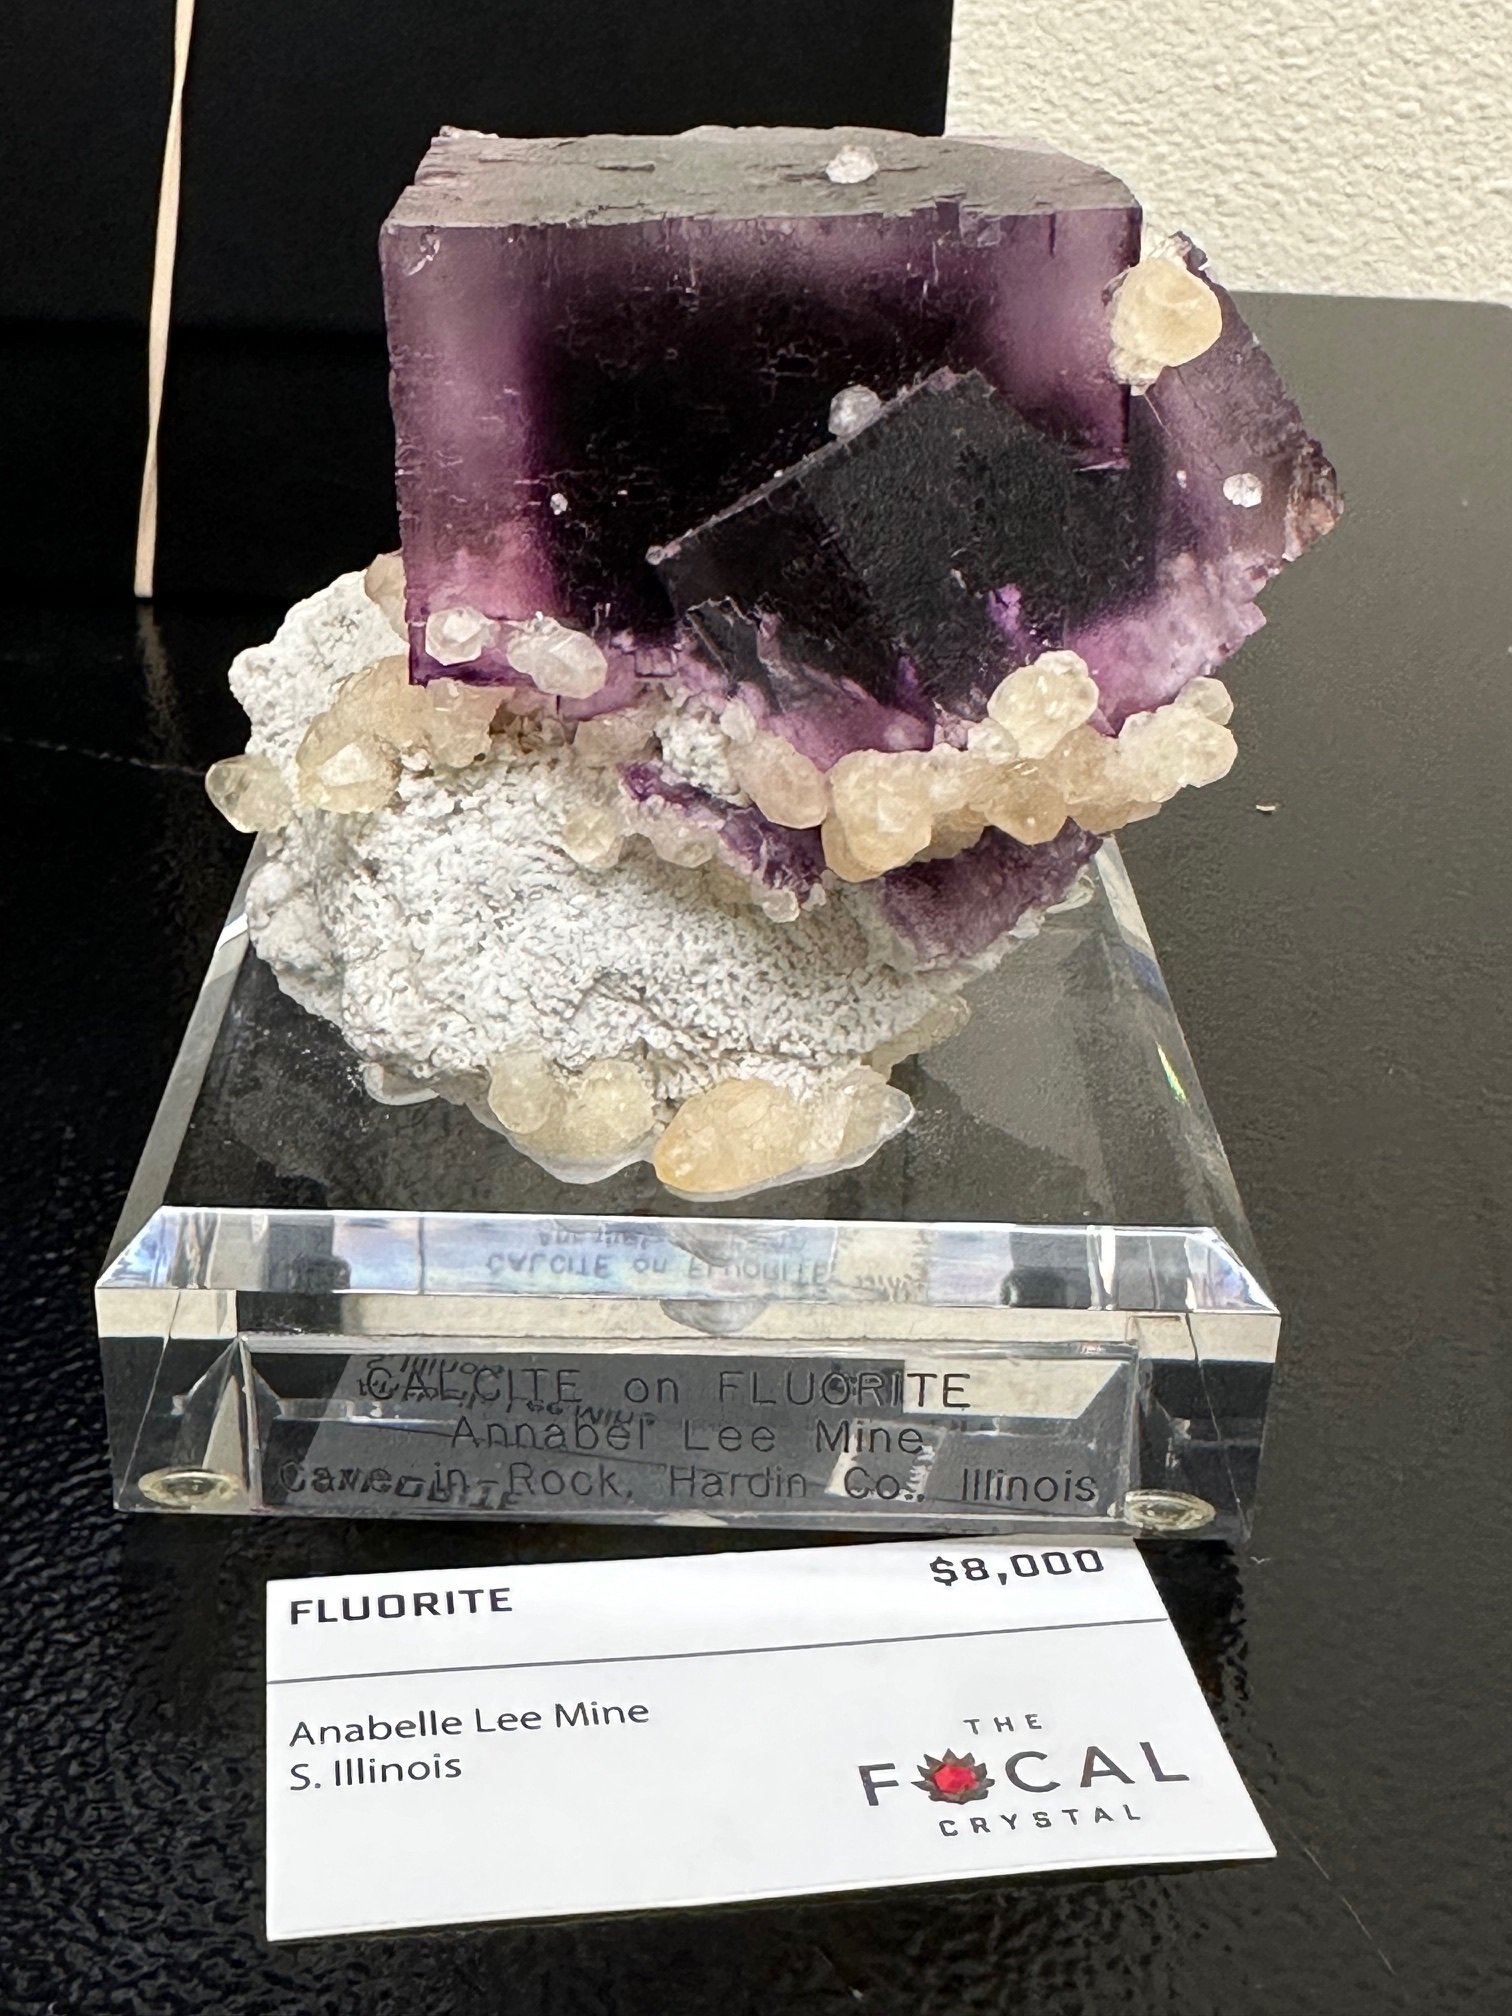 Raspberry Fluorite with Calcite, sold